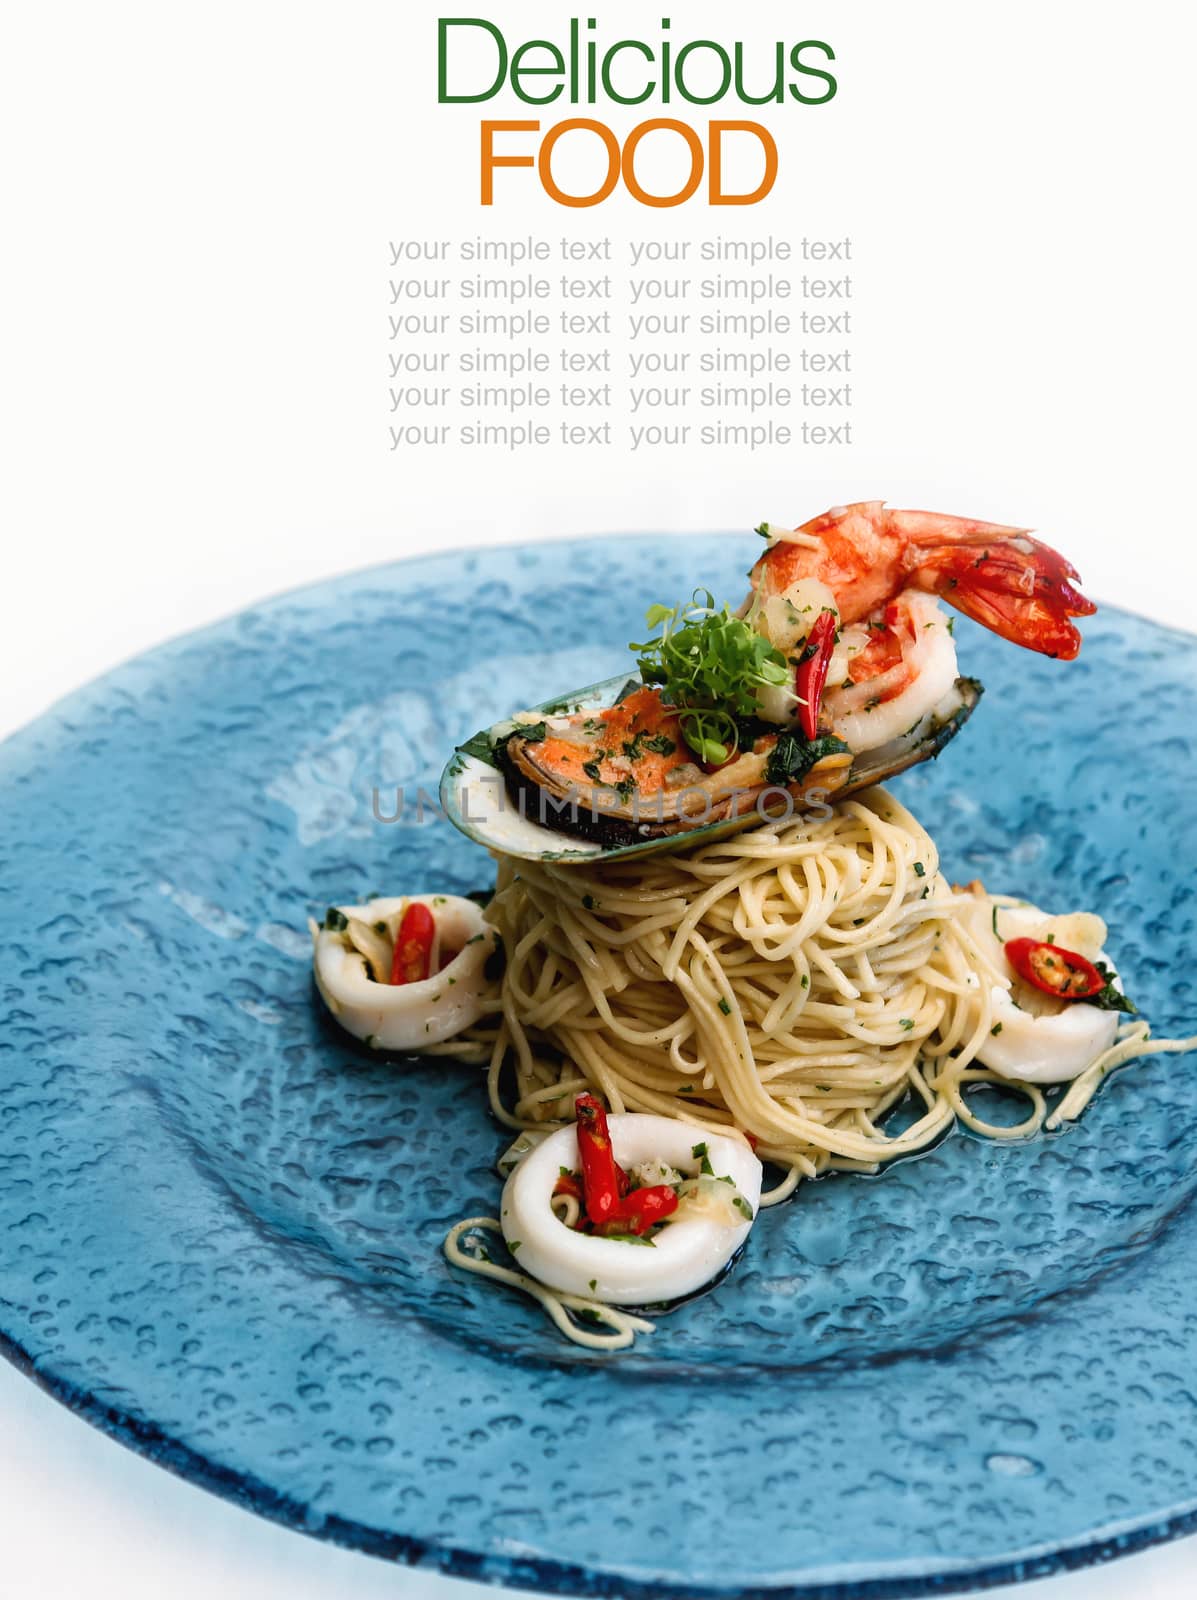 Italian cuisine spaghetti and seafood. by kerdkanno